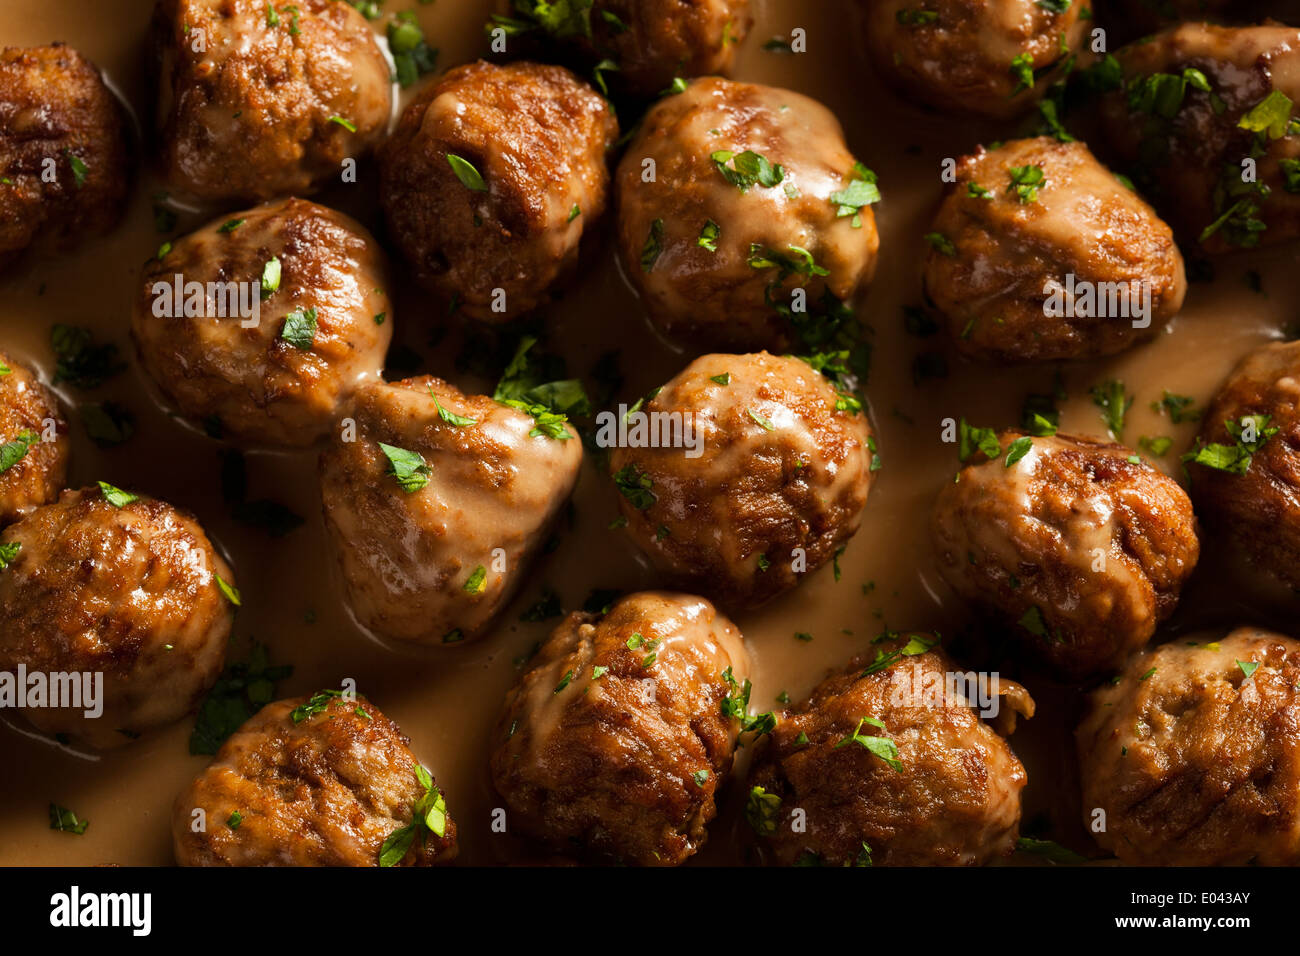 Homemade Swedish Meatballs with Cream Sauce and Parsley Stock Photo